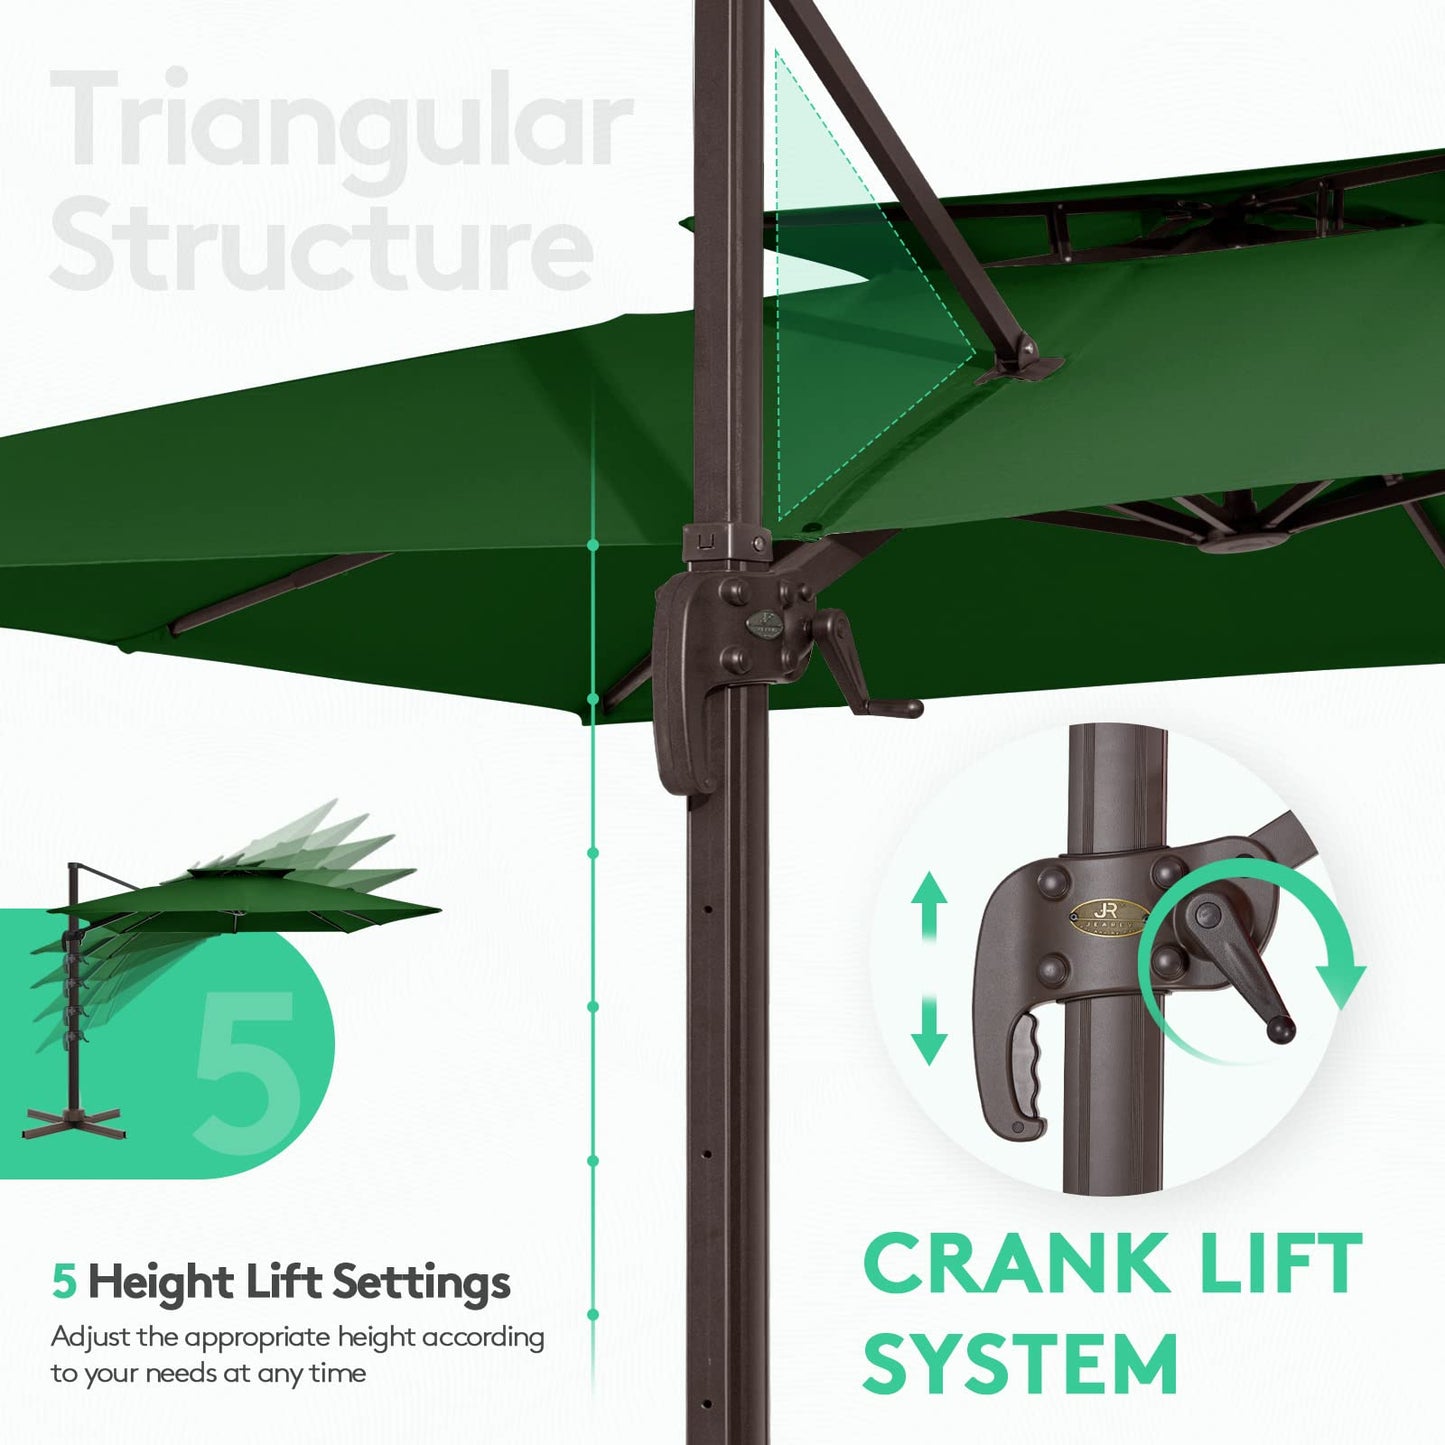 Square Cantilever Patio Umbrella 9FT Dark Green